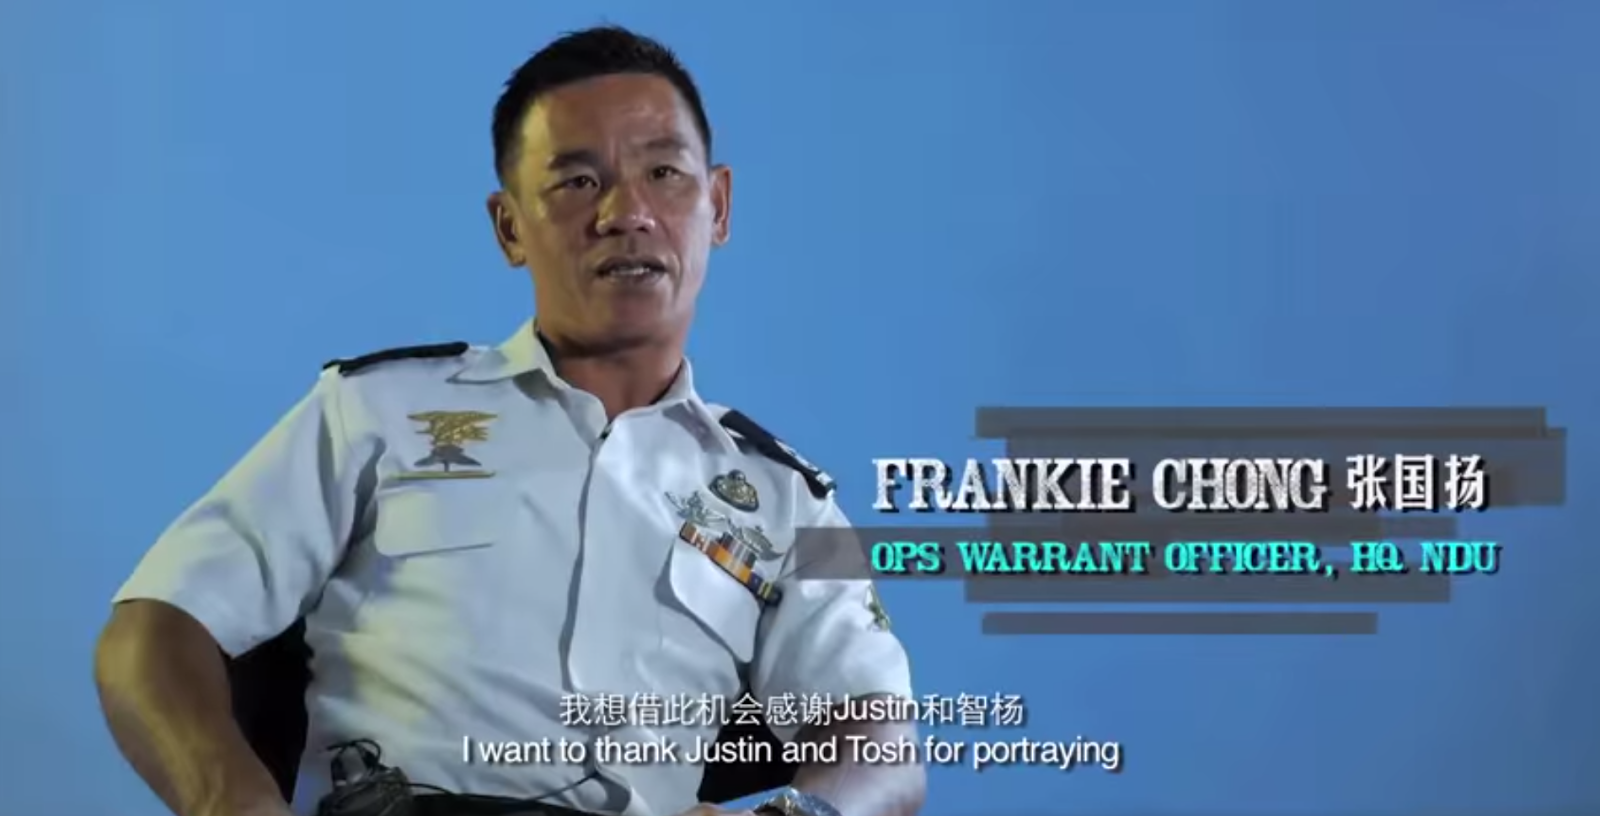 Warrant Officer Frankie Chong